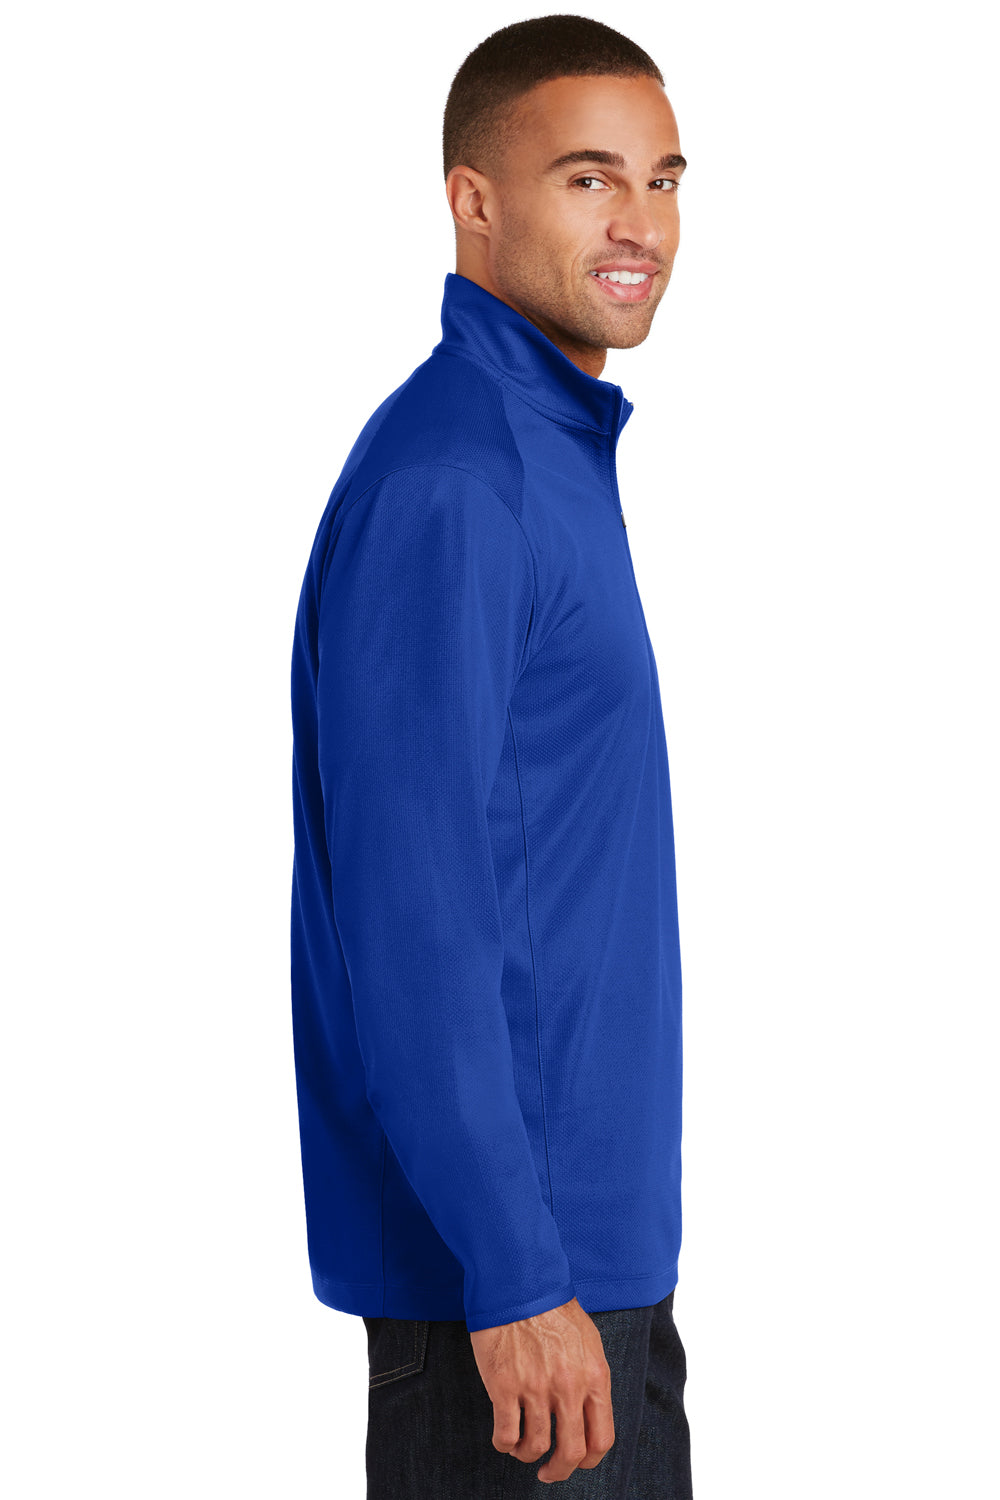 Port Authority K806 Mens Moisture Wicking 1/4 Zip Sweatshirt Royal Blue Side